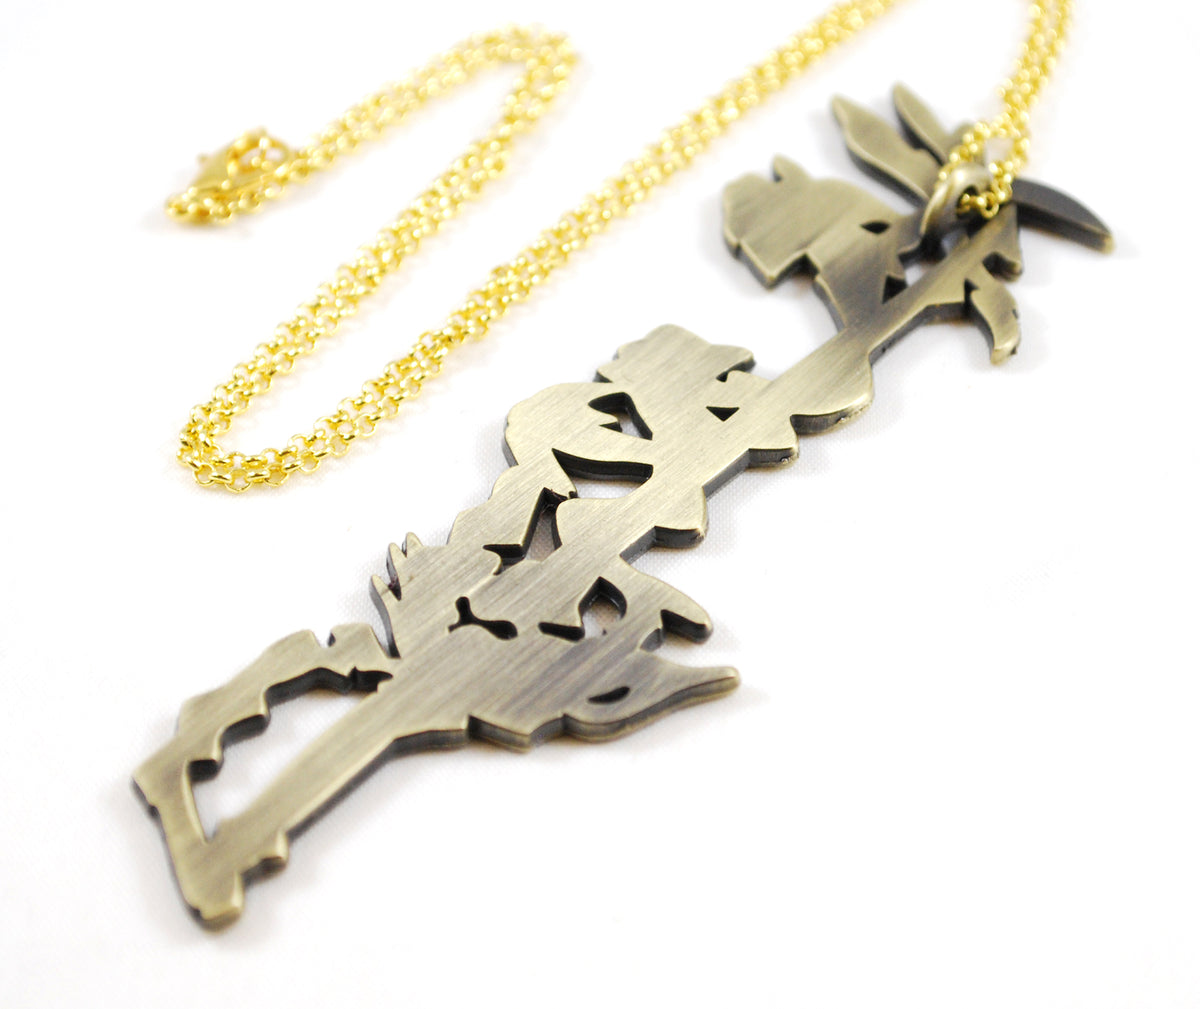 Judas Priest Silver Color British Steel Necklace and Razor Blade Pendant  new